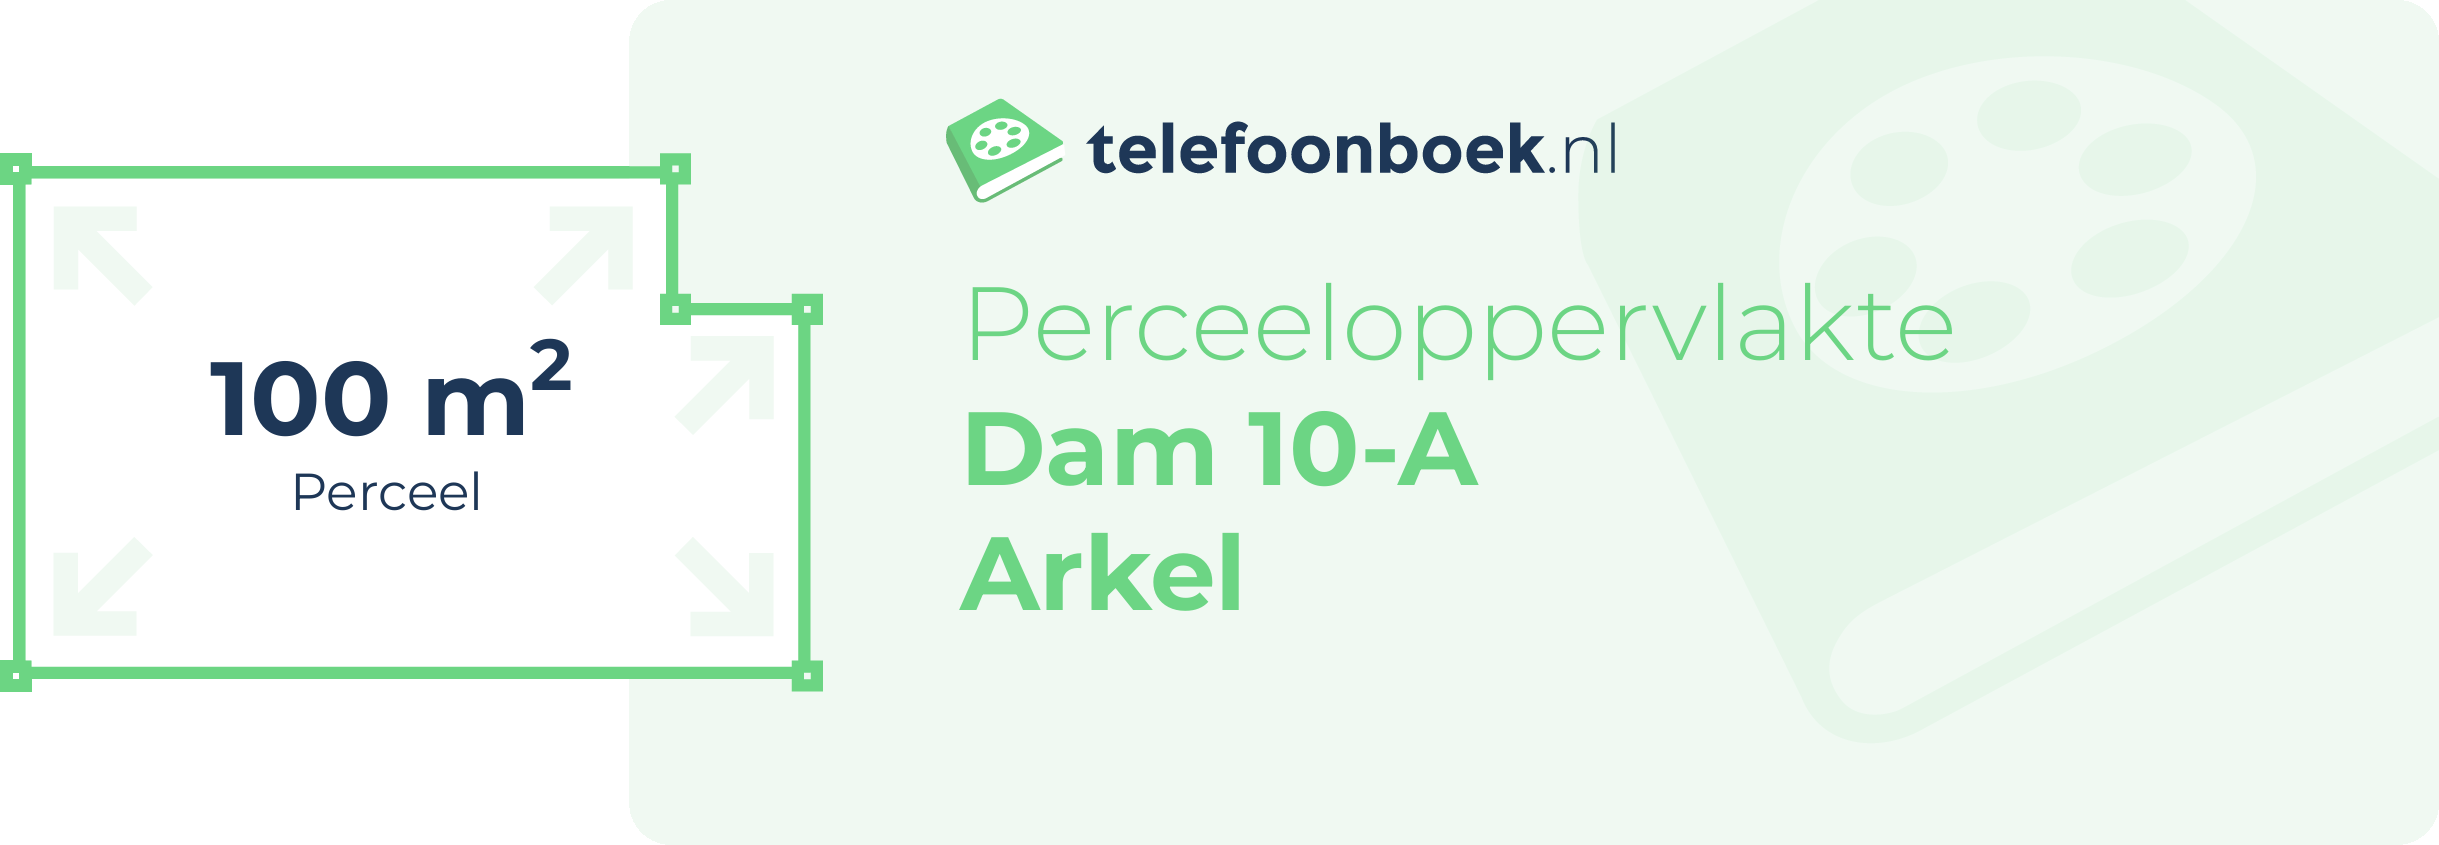 Perceeloppervlakte Dam 10-A Arkel